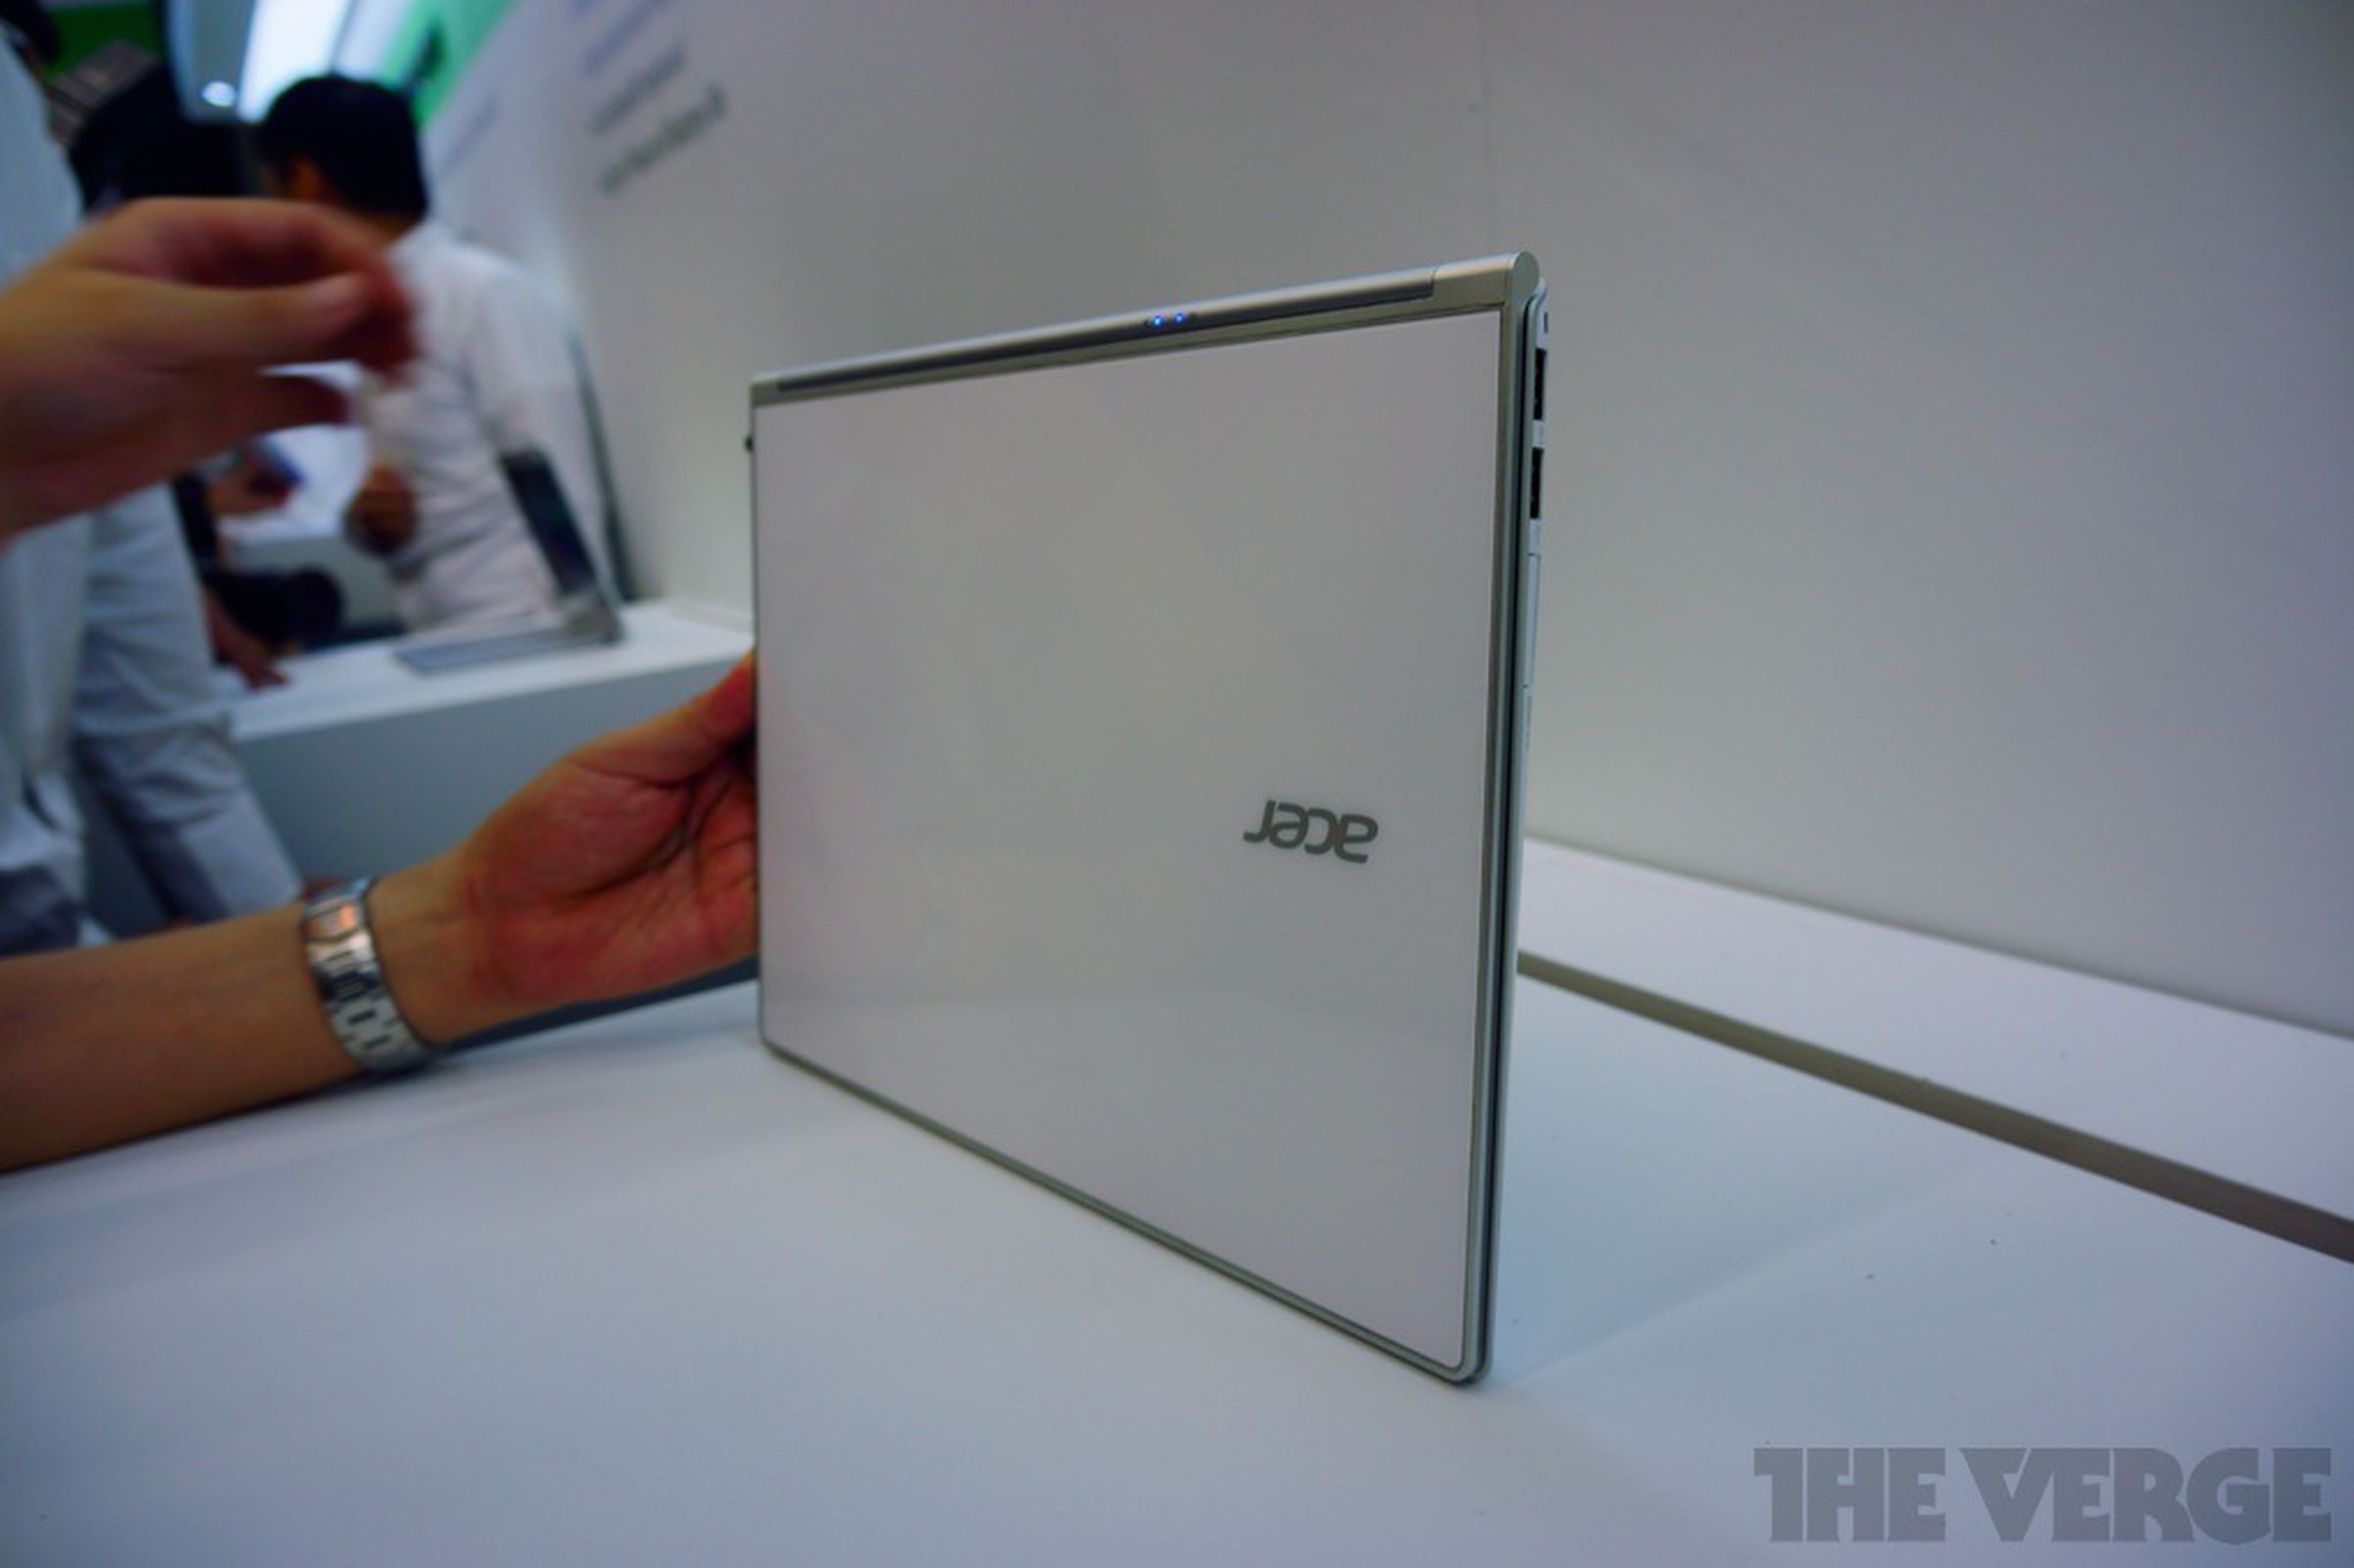 Acer Aspire S7 photos